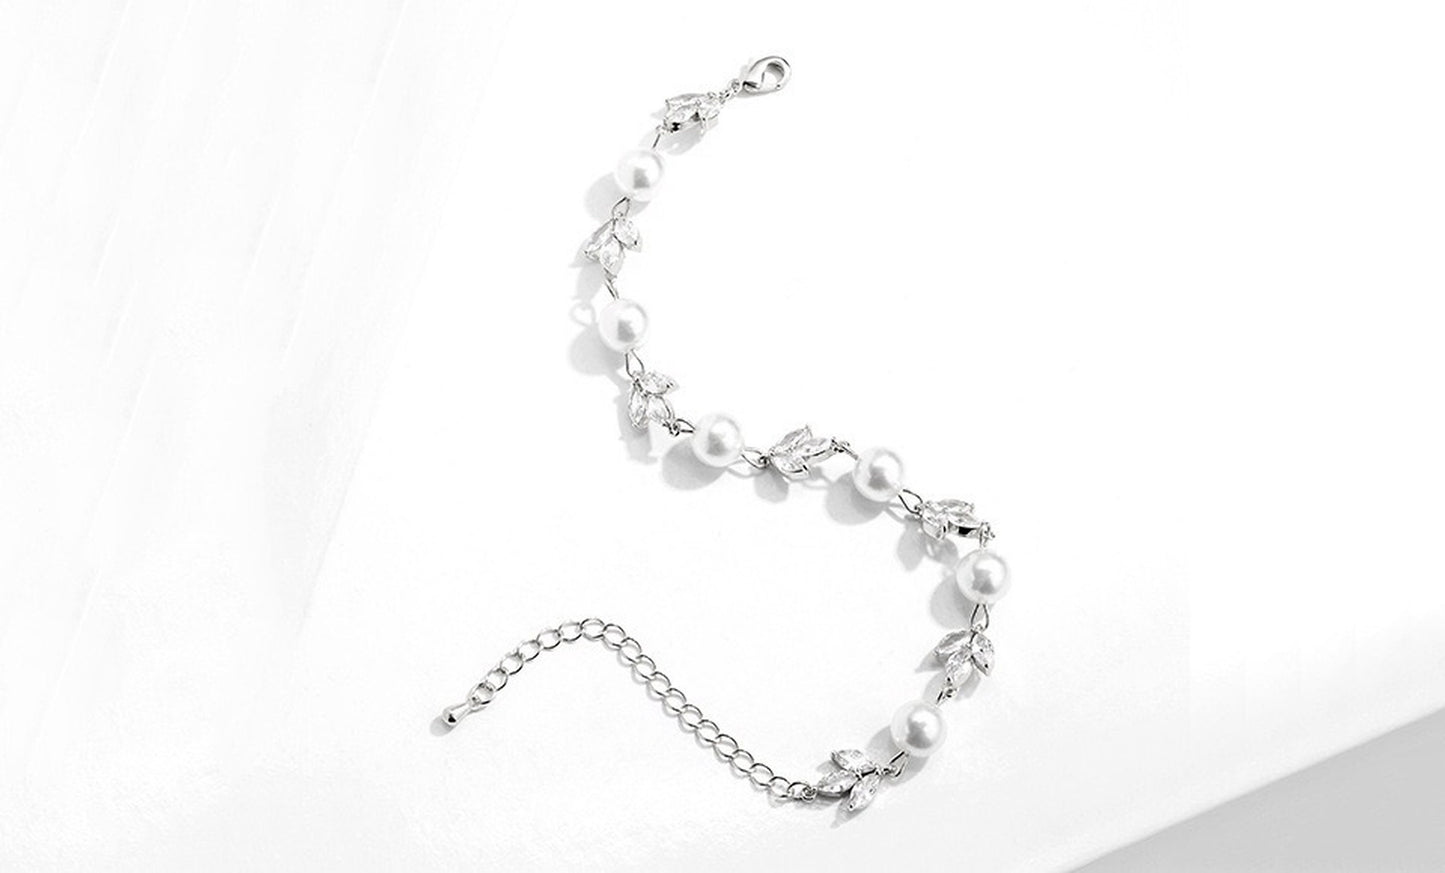 Pearl crystal bracelet, Bridal bridesmaid pearl bracelet, Crystal diamond pearl bracelet, Leaf floral pearl bracelets, Wedding jewelry gift